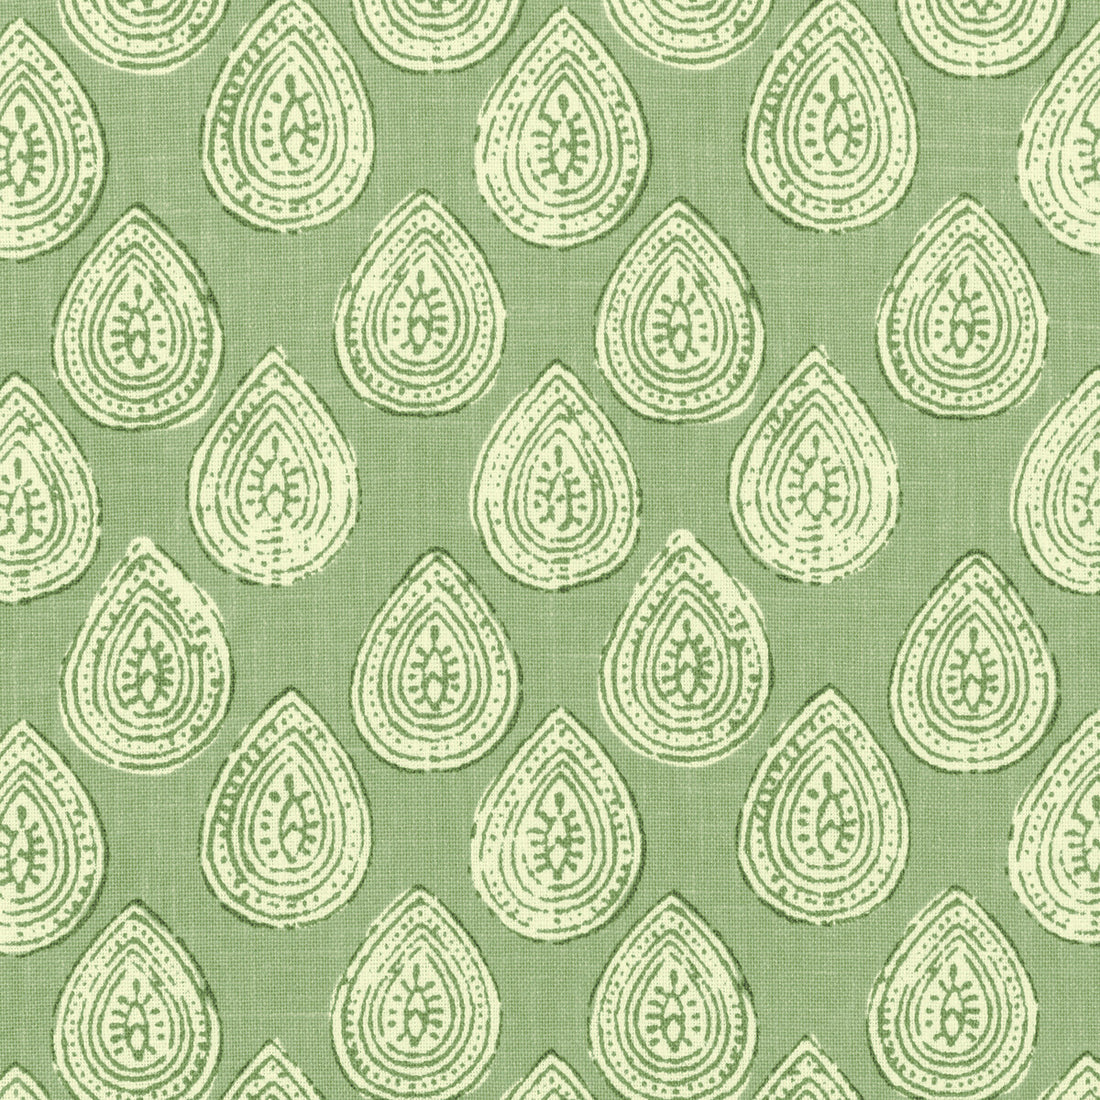 Kravet Basics fabric in calico-30 color - pattern CALICO.30.0 - by Kravet Basics in the L&